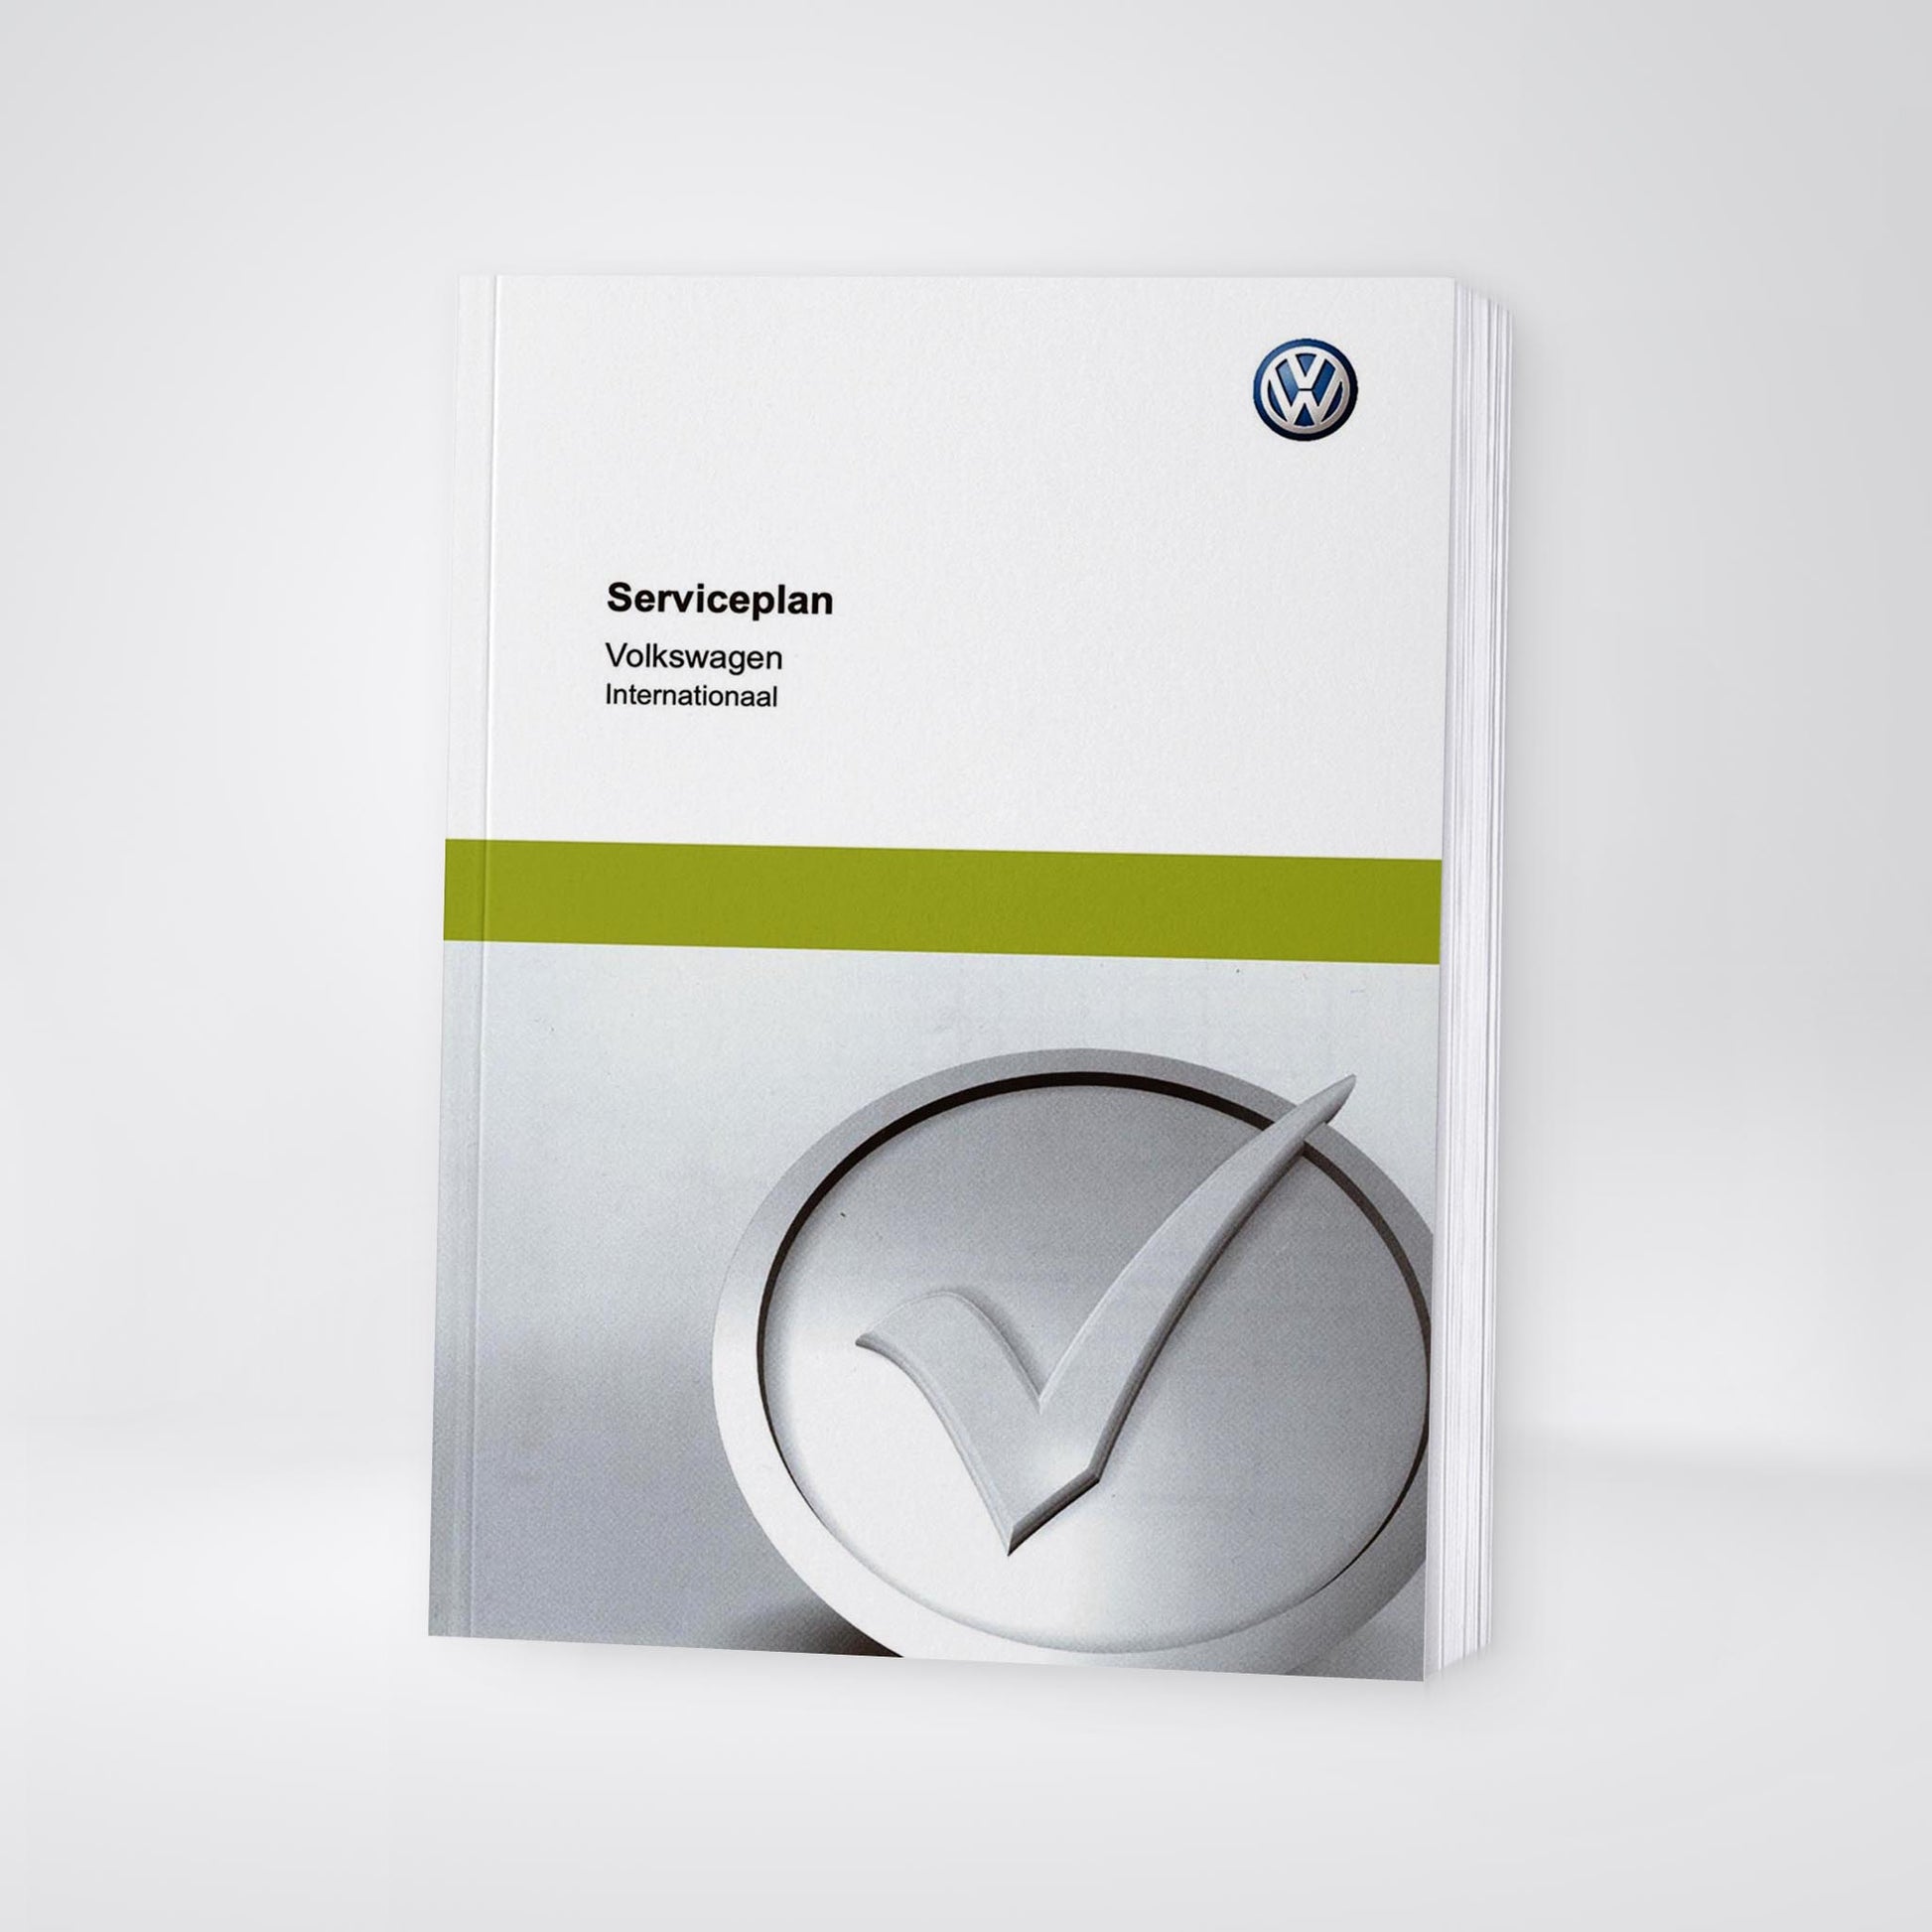 Volkswagen Serviceplan 2014